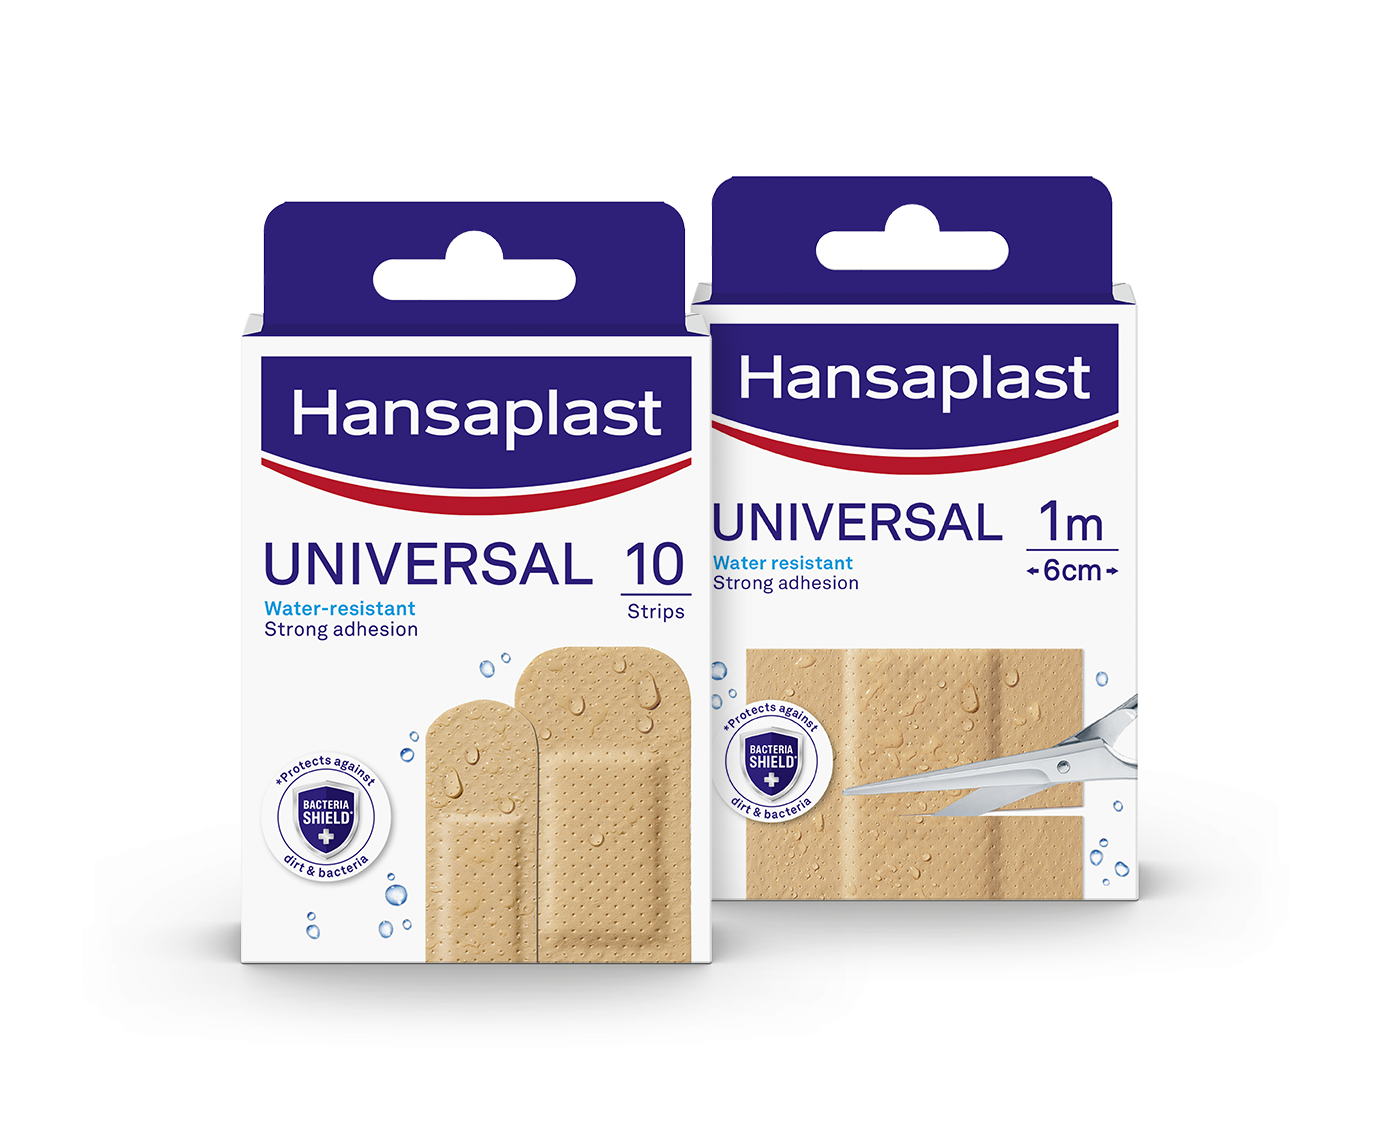 Hansaplast universal